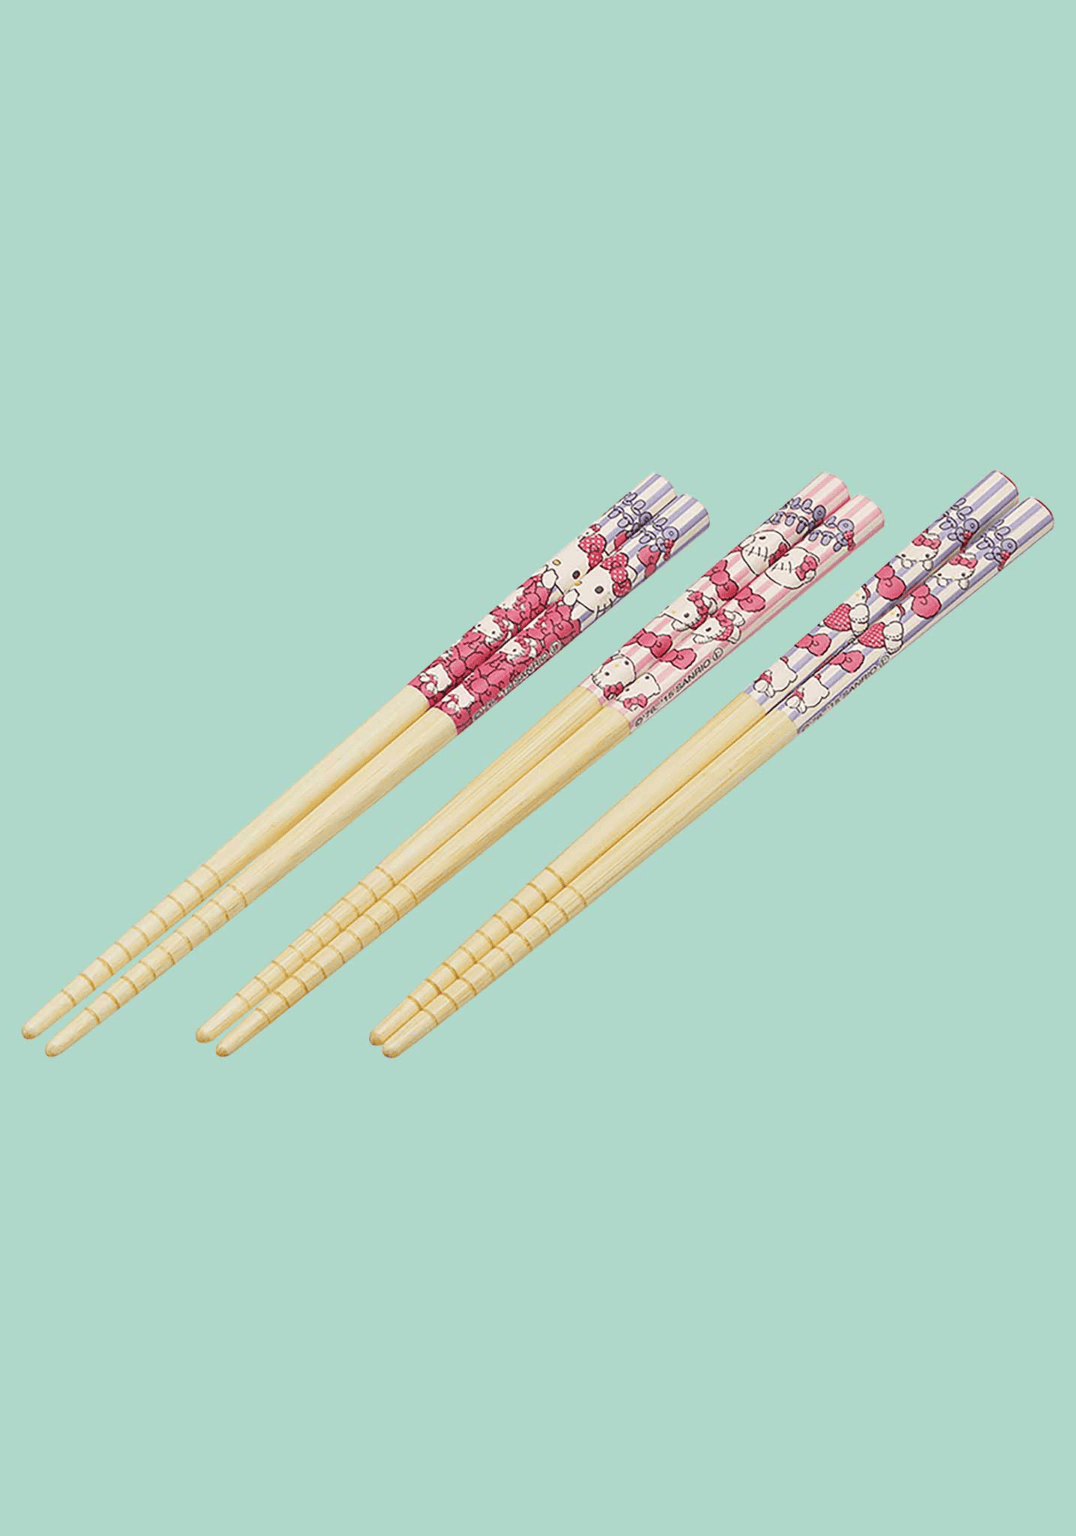 Clever Idiots Hello Kitty Bamboo Chopsticks 3pcs Set Kawaii Gifts